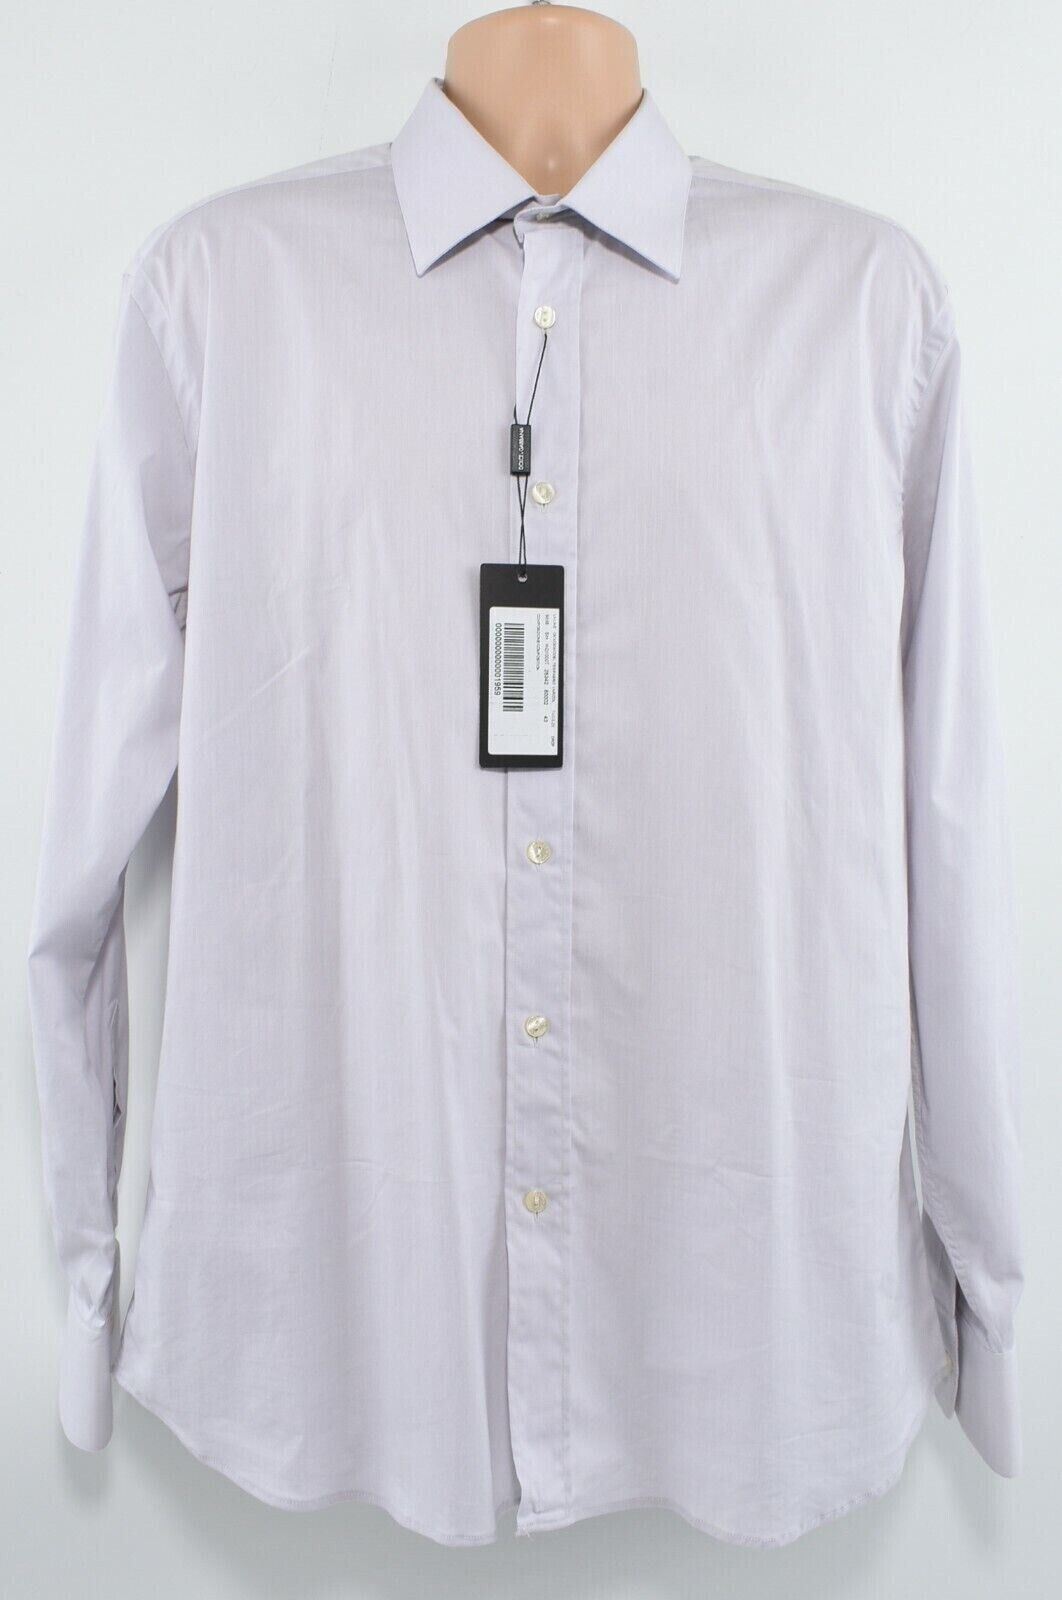 DOLCE & GABBANA Mens Long Sleeve Light Grey Shirt, size collar 17.5"